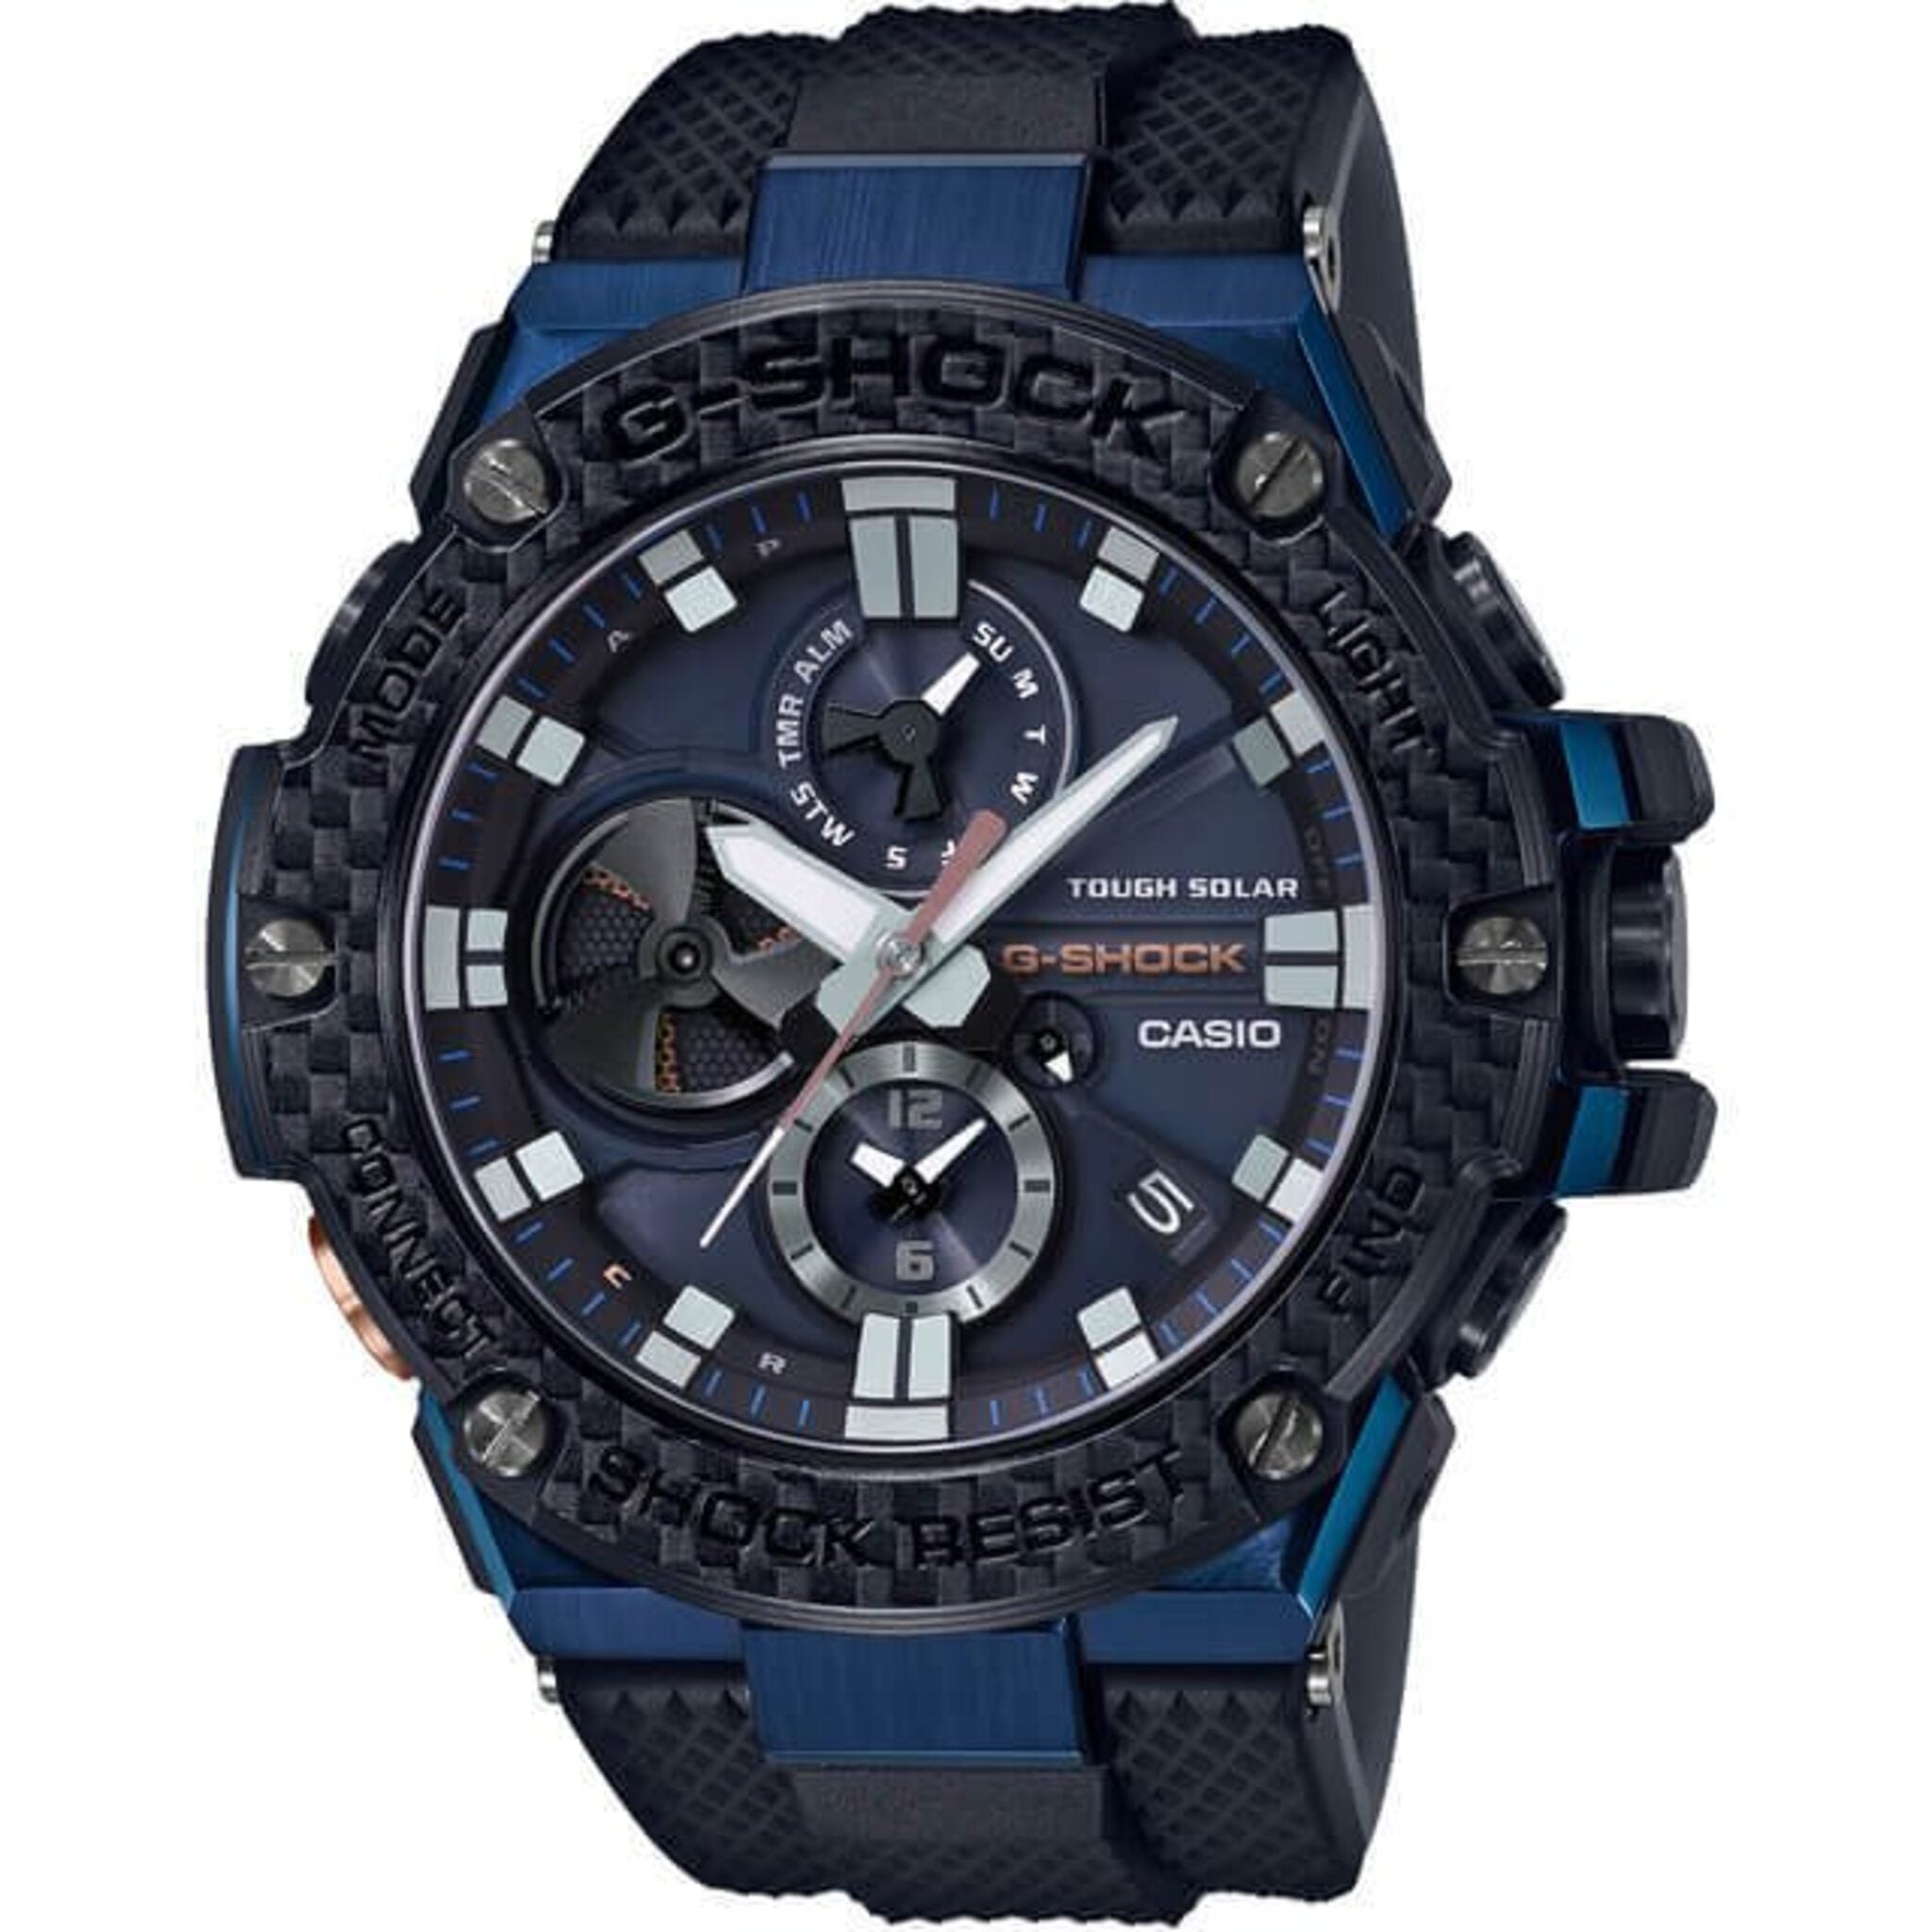 G-Shock - G-Steel Carbon Series Model GST-B100XB-2A Watch 